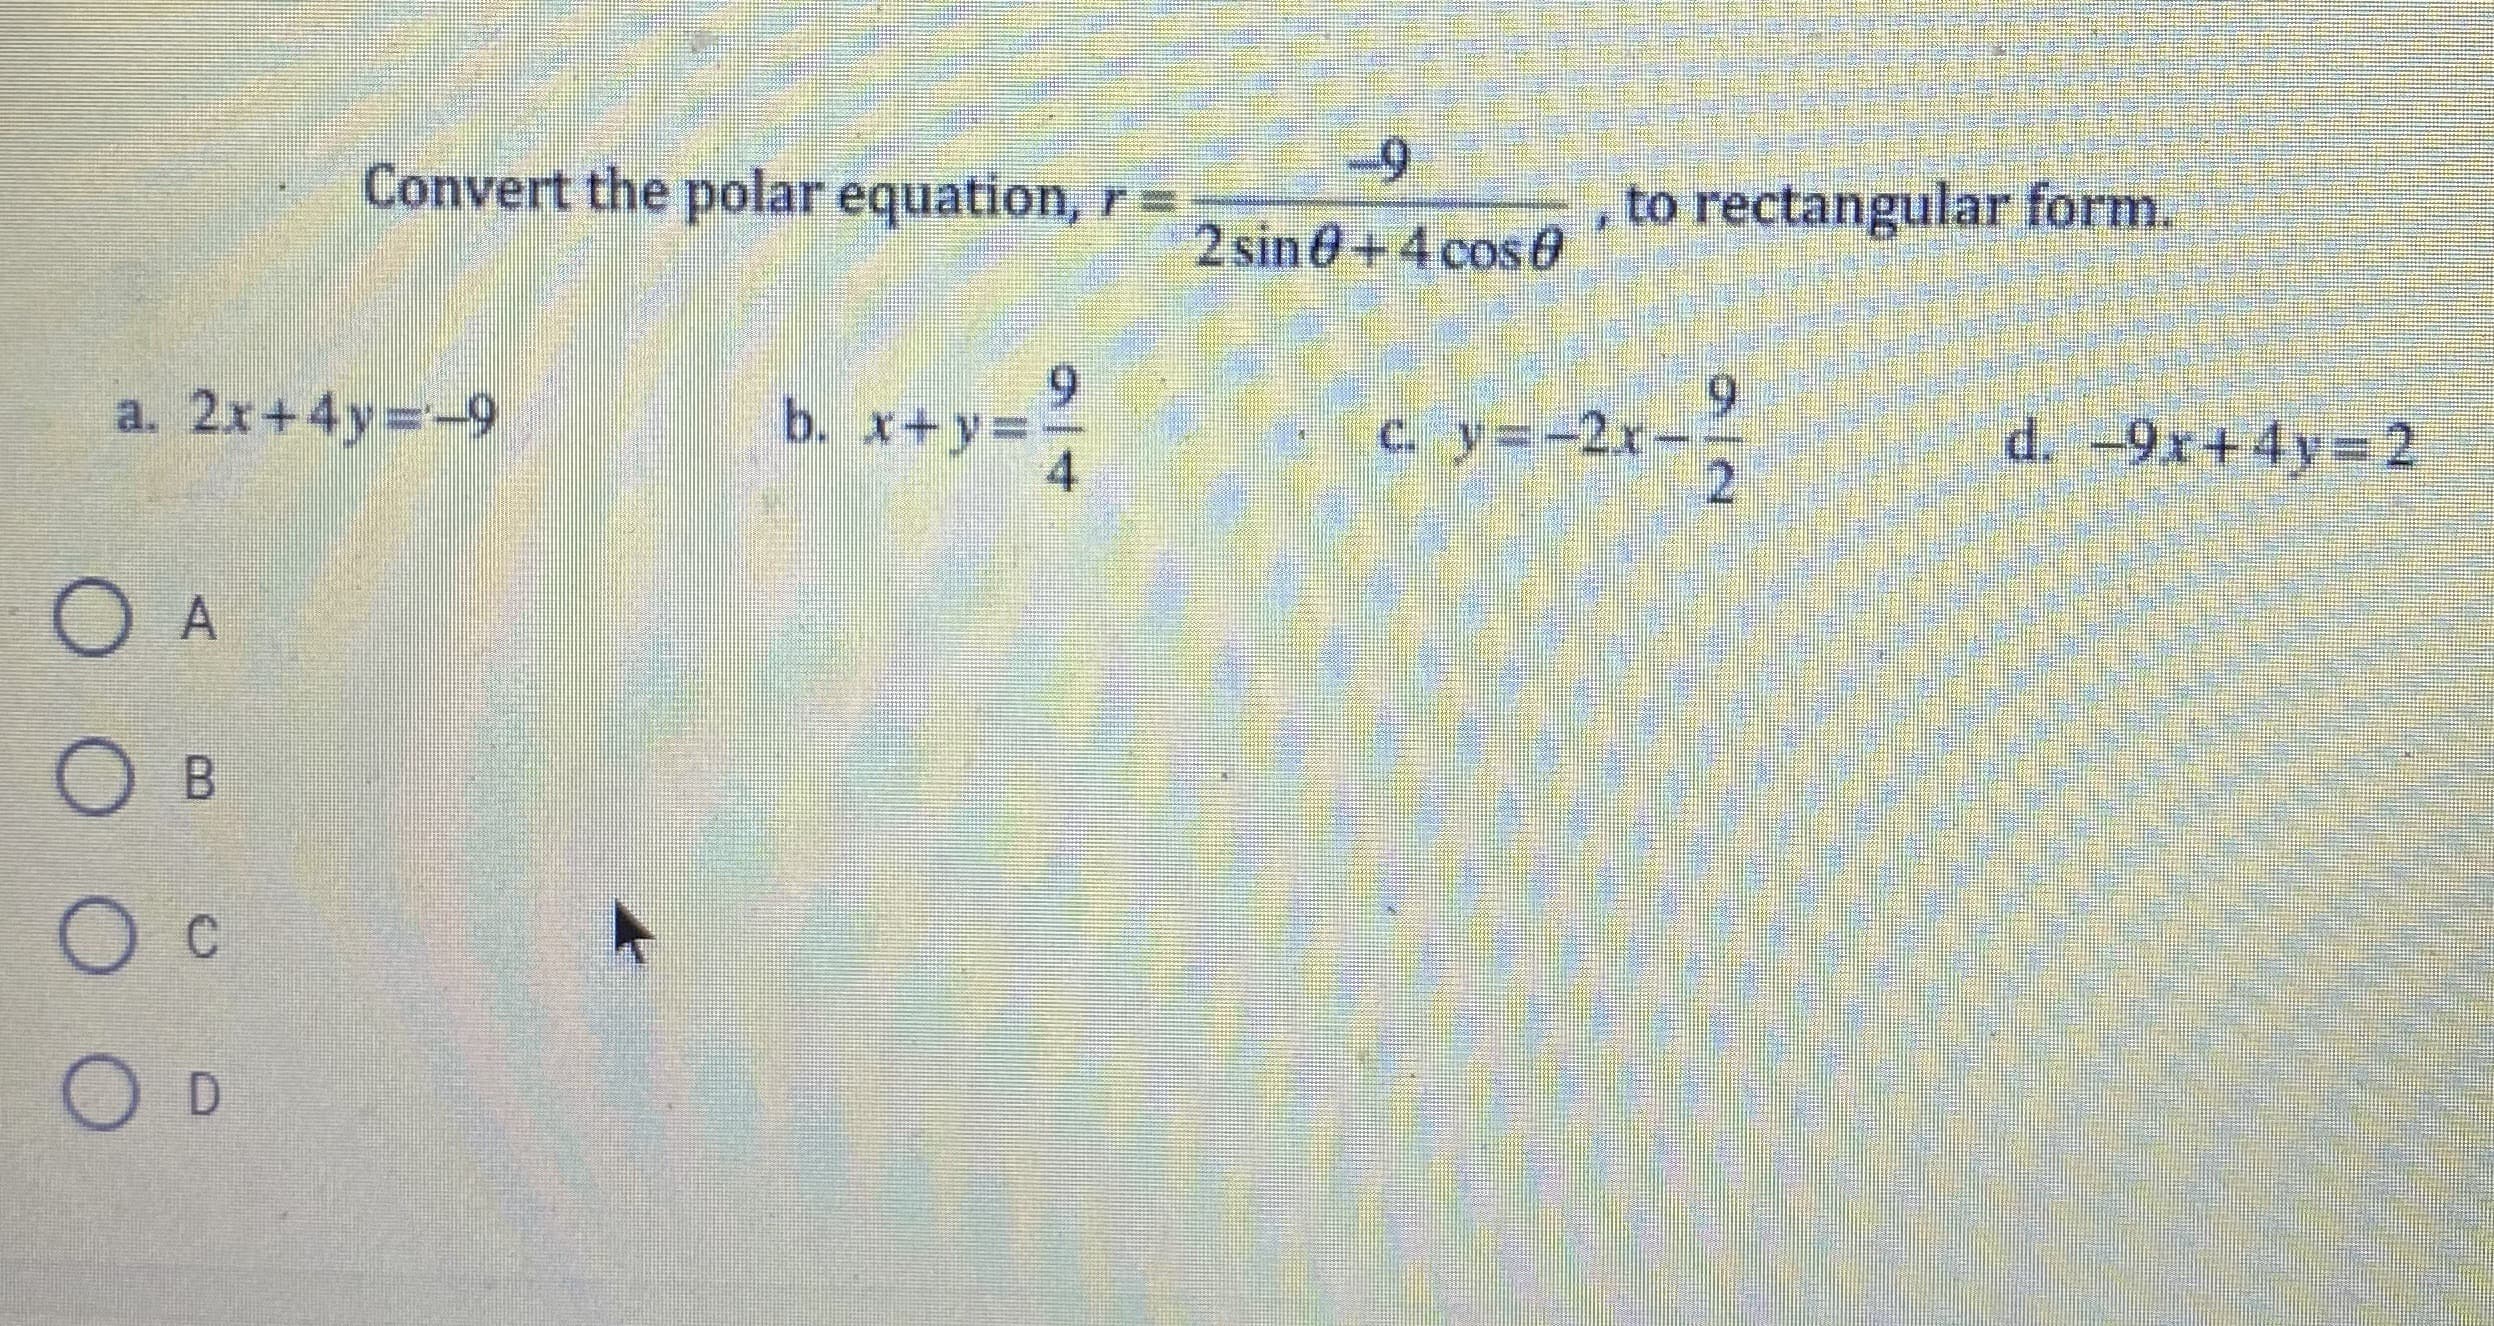 Convert the polar equation, r=
to rectangular form.
2 sin 0+4 cos0
6.
b. x+y3D
4
6.
c. y=-2x-
a. 2x+4y=-9
d. -9x+4y 2
B.
